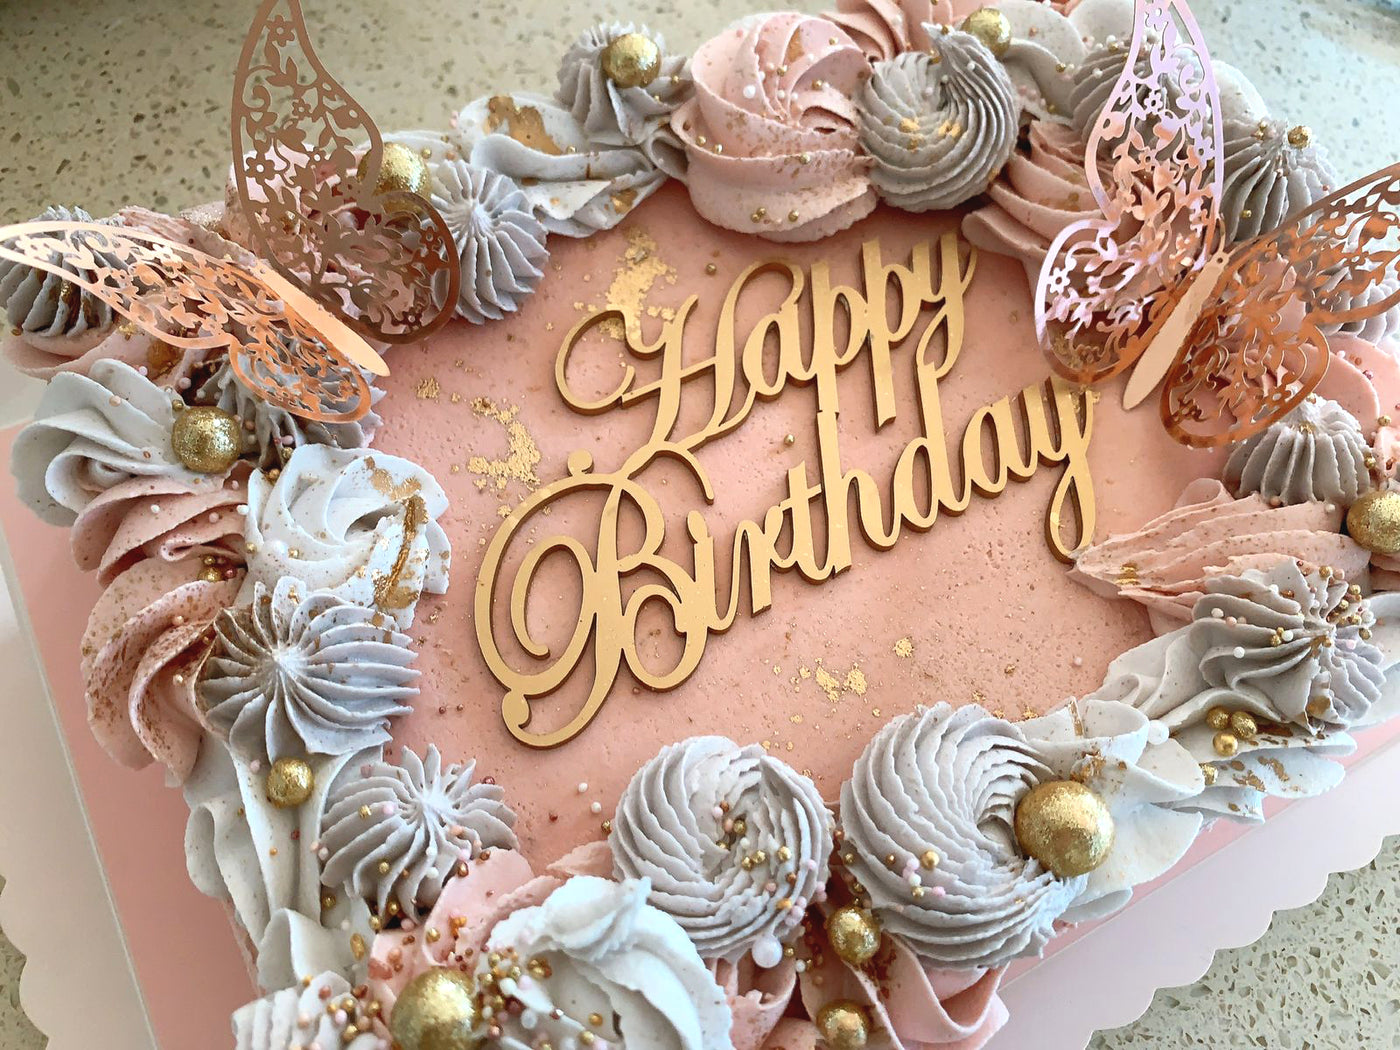 19 Anita ideas | birthday cake writing, birthday wishes cake, cake name